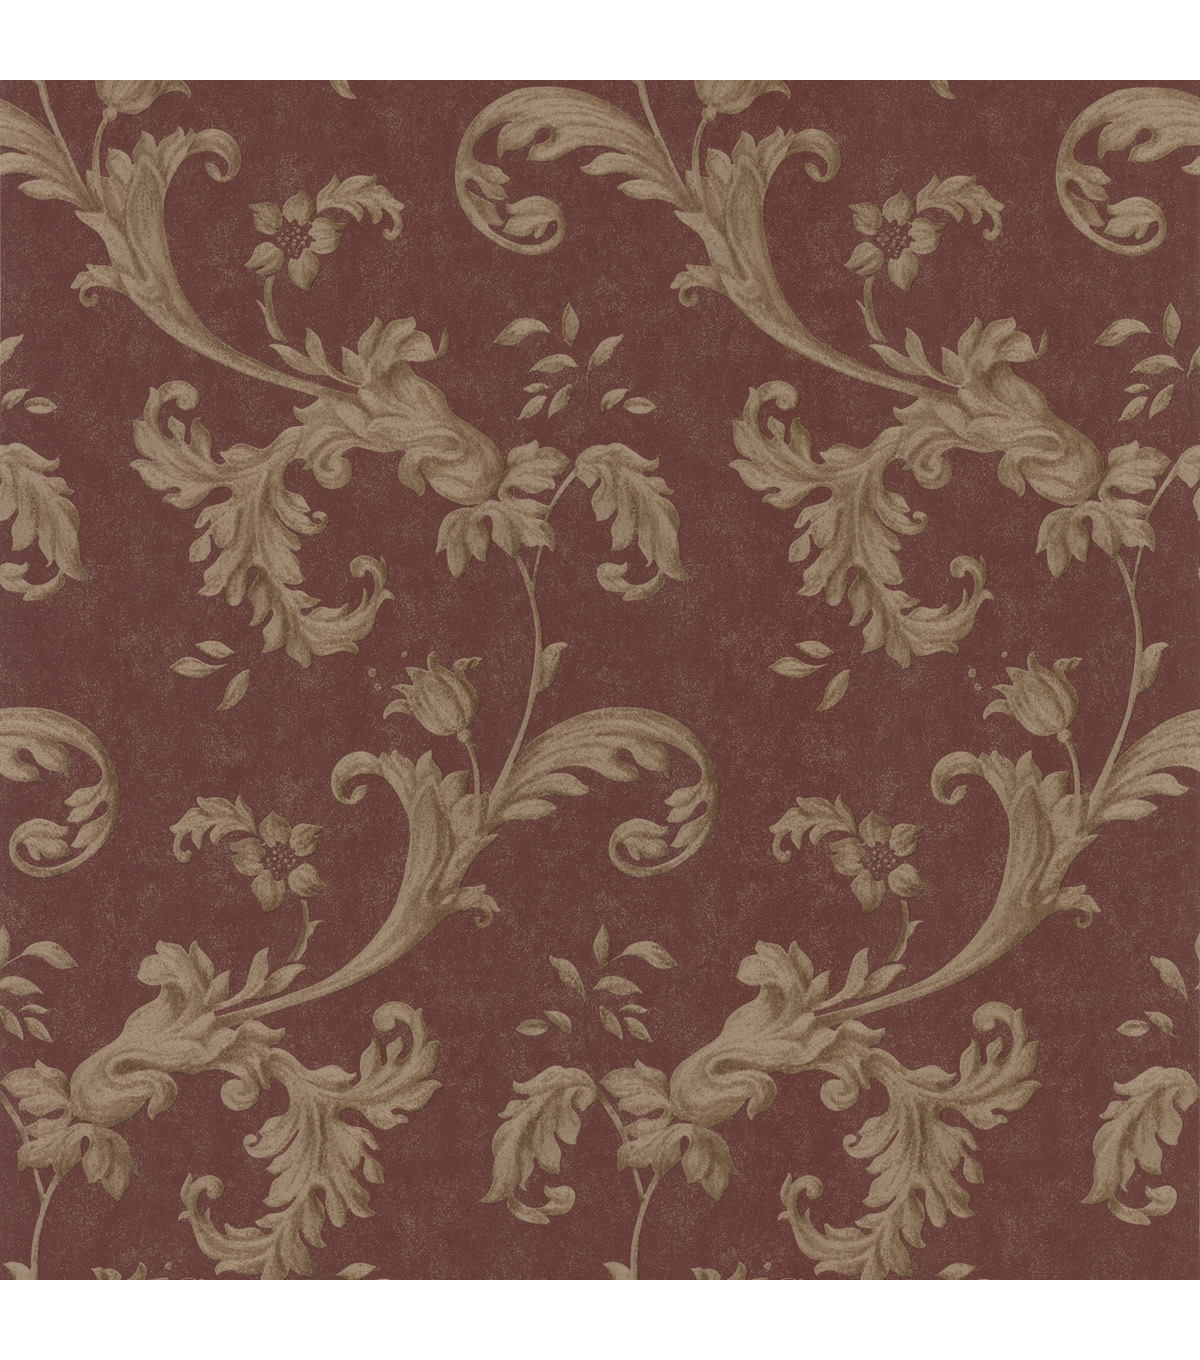 Isleworth Burgundy Floral Scroll Wallpaper Jo Ann